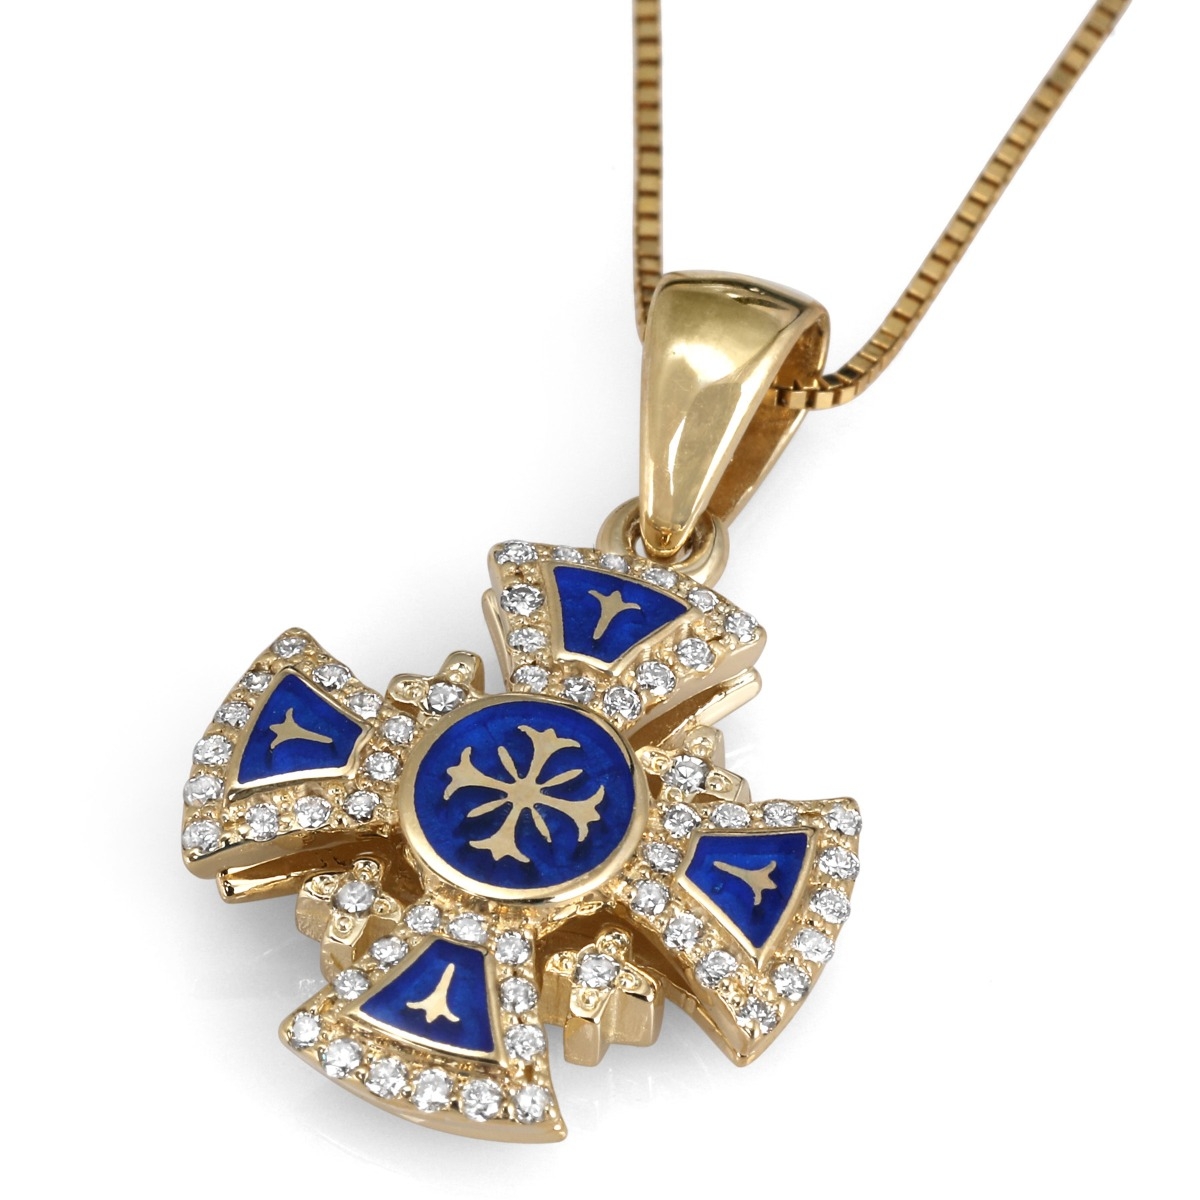 Anbinder Jewelry 14K Yellow Gold and Enamel Fleur de Lis Splayed Jerusalem Cross Pendant with 56 Diamonds  - 1